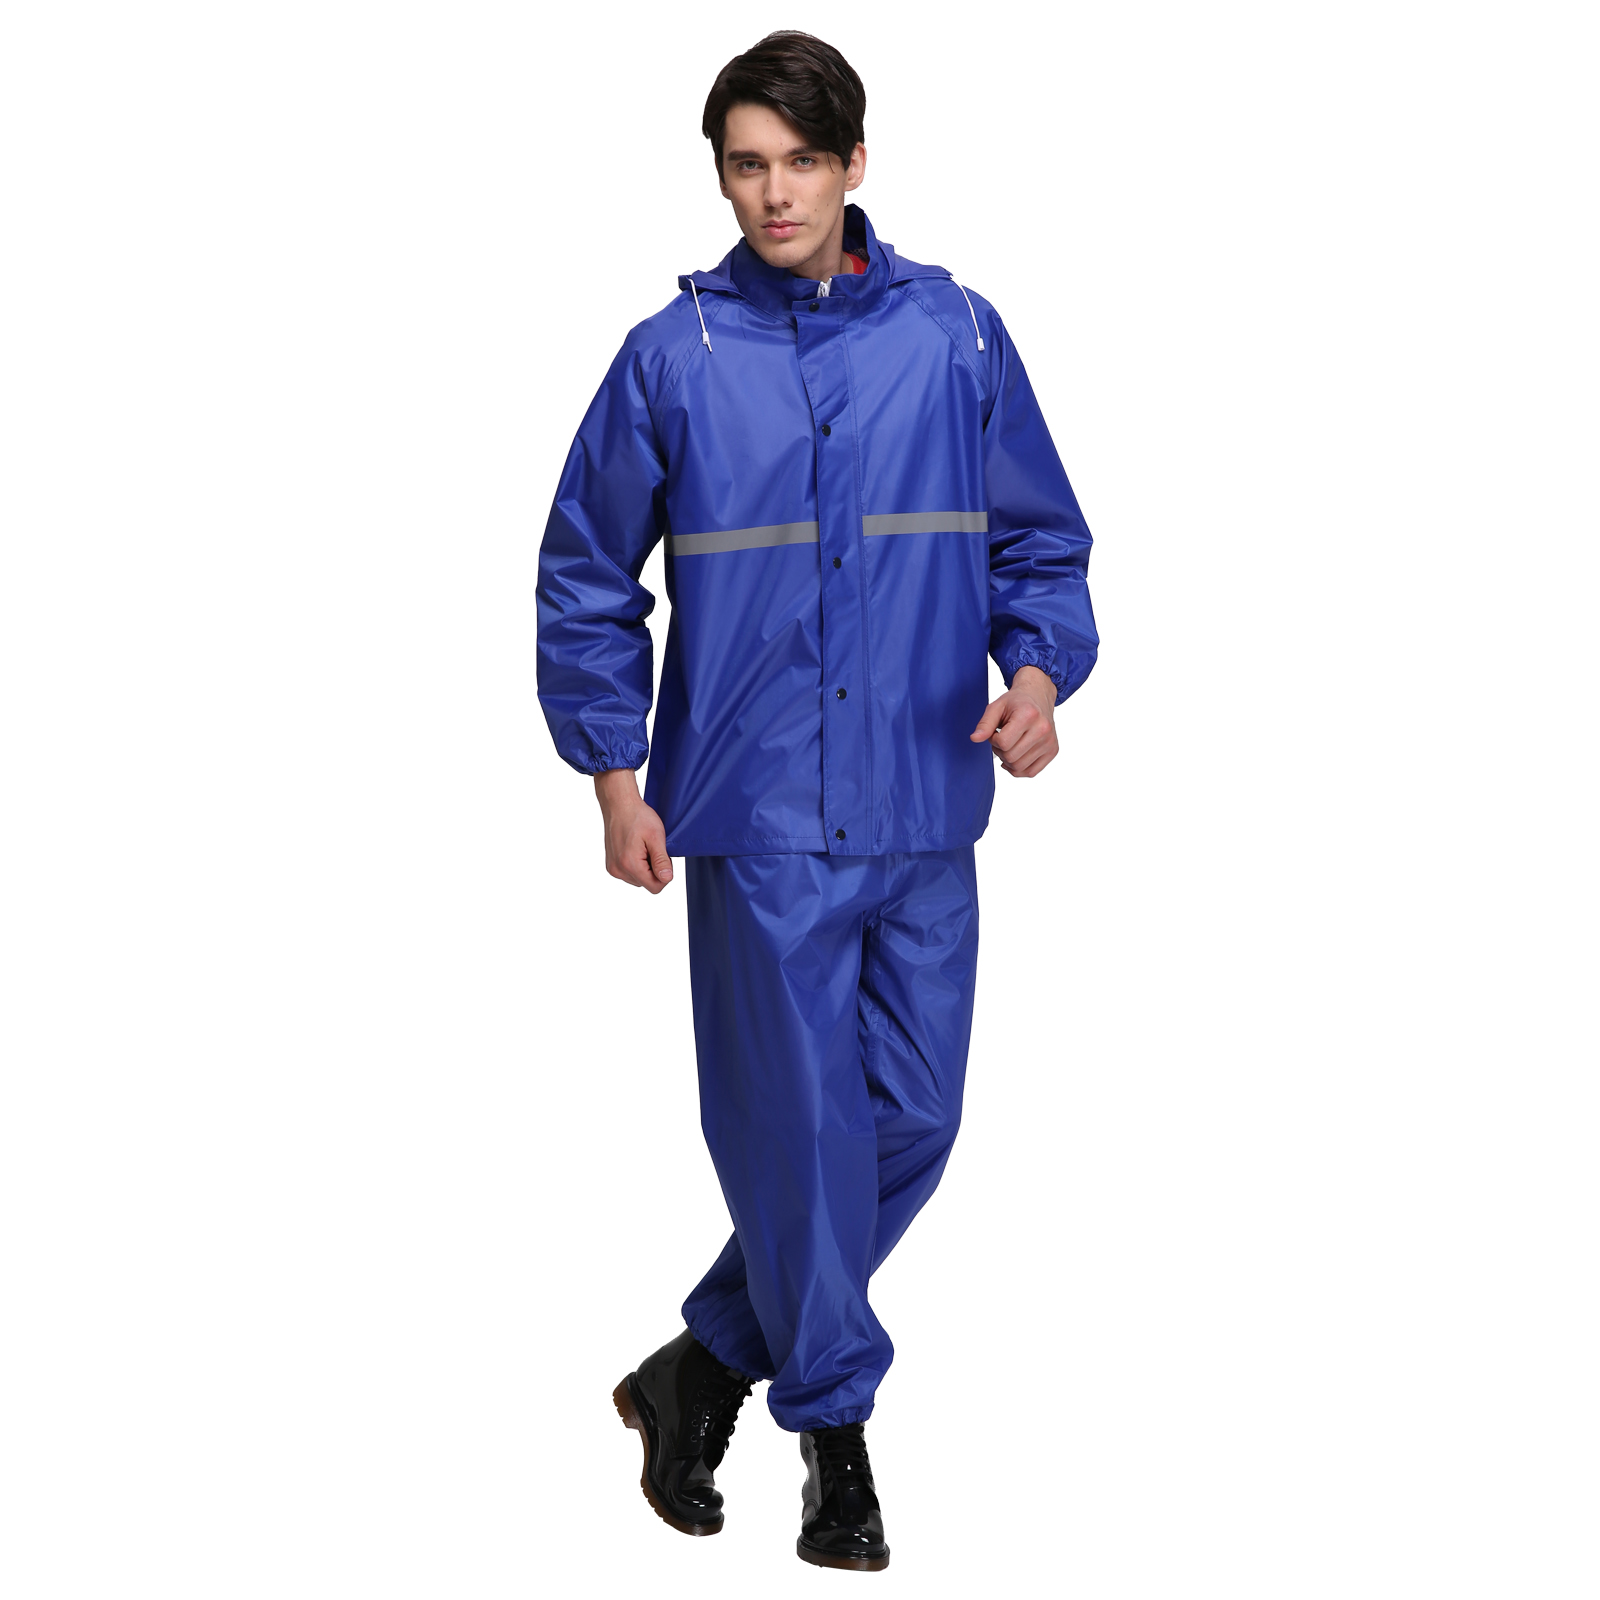 TOPTIE Rain Suit Waterproof Raincoat, Rain Jacket &Trousers Breathable Rain  Gear for Fishing -Blue-L Sale, Reviews. - Opentip